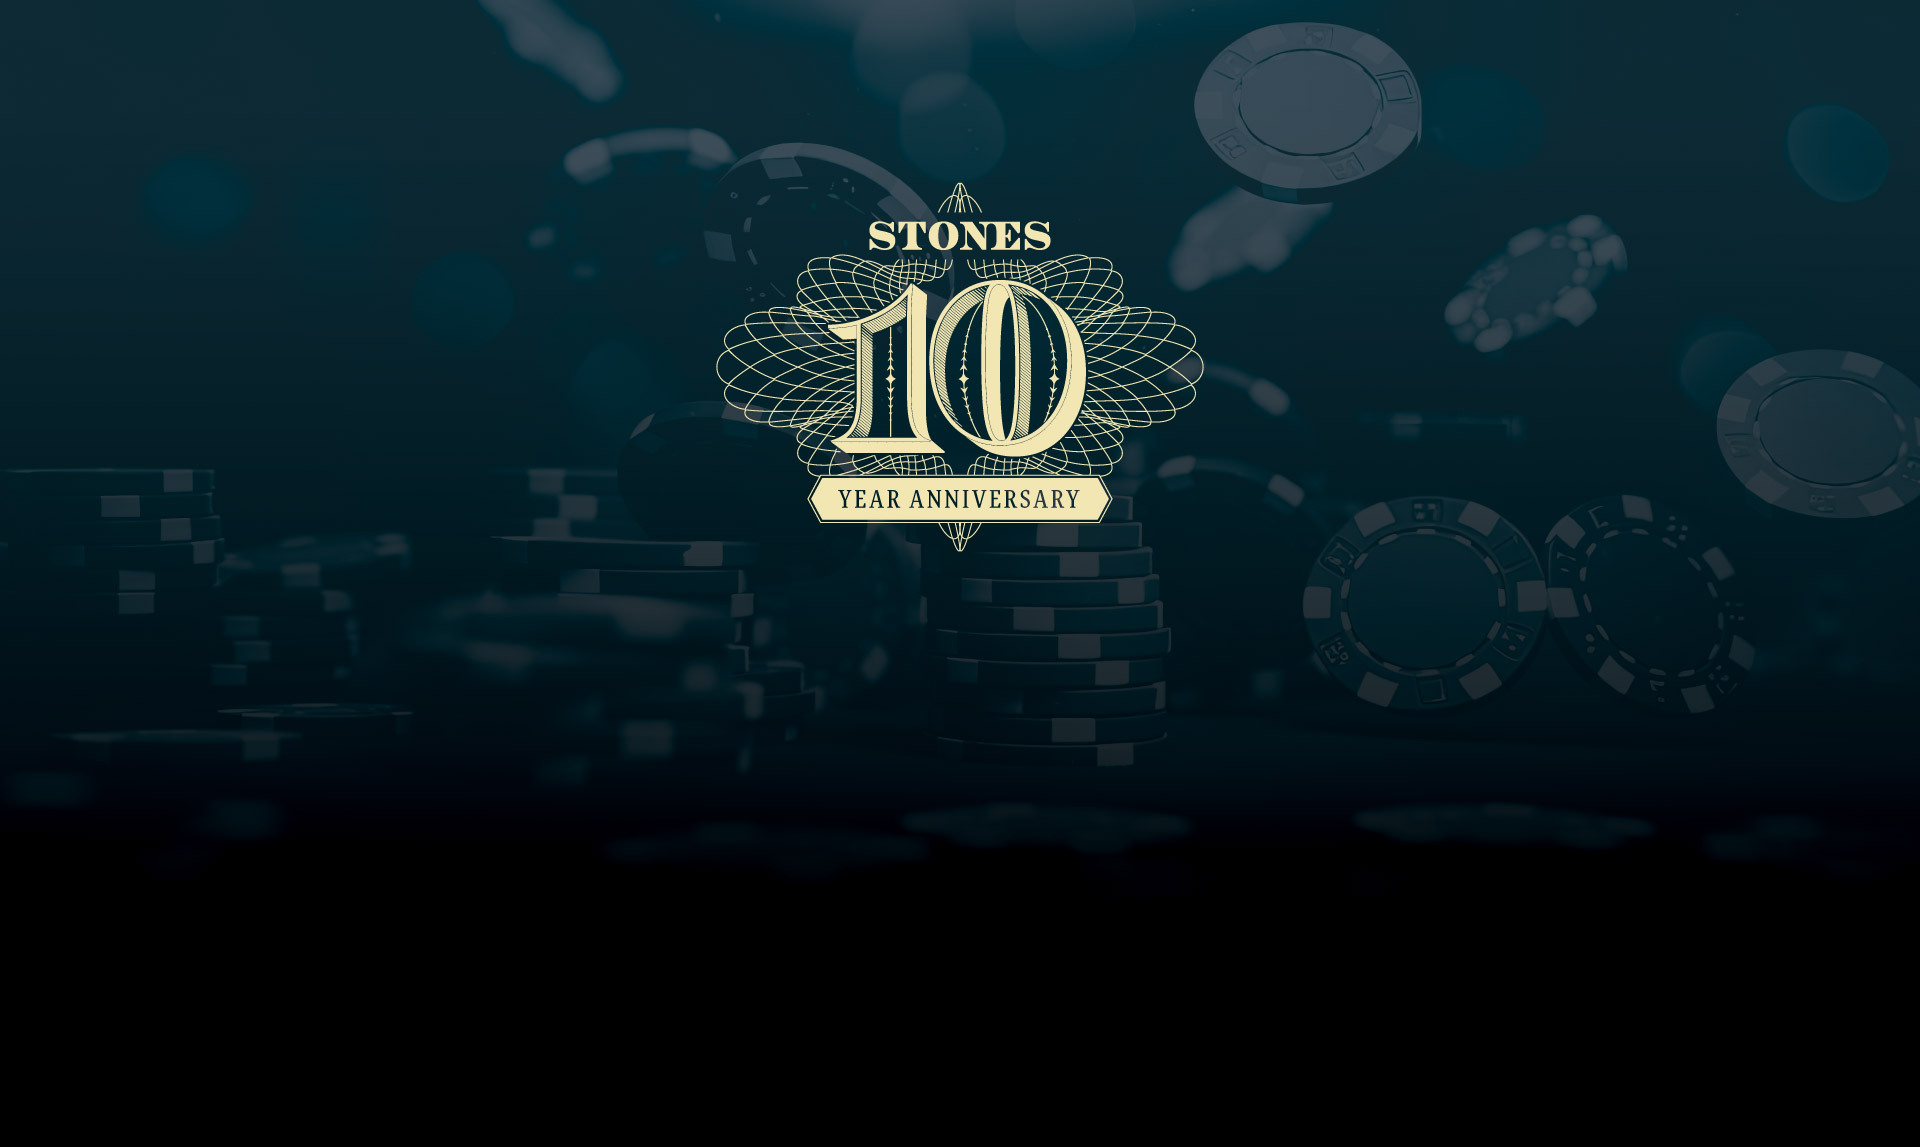 10 Year Anniversary logo on blue chip artwork